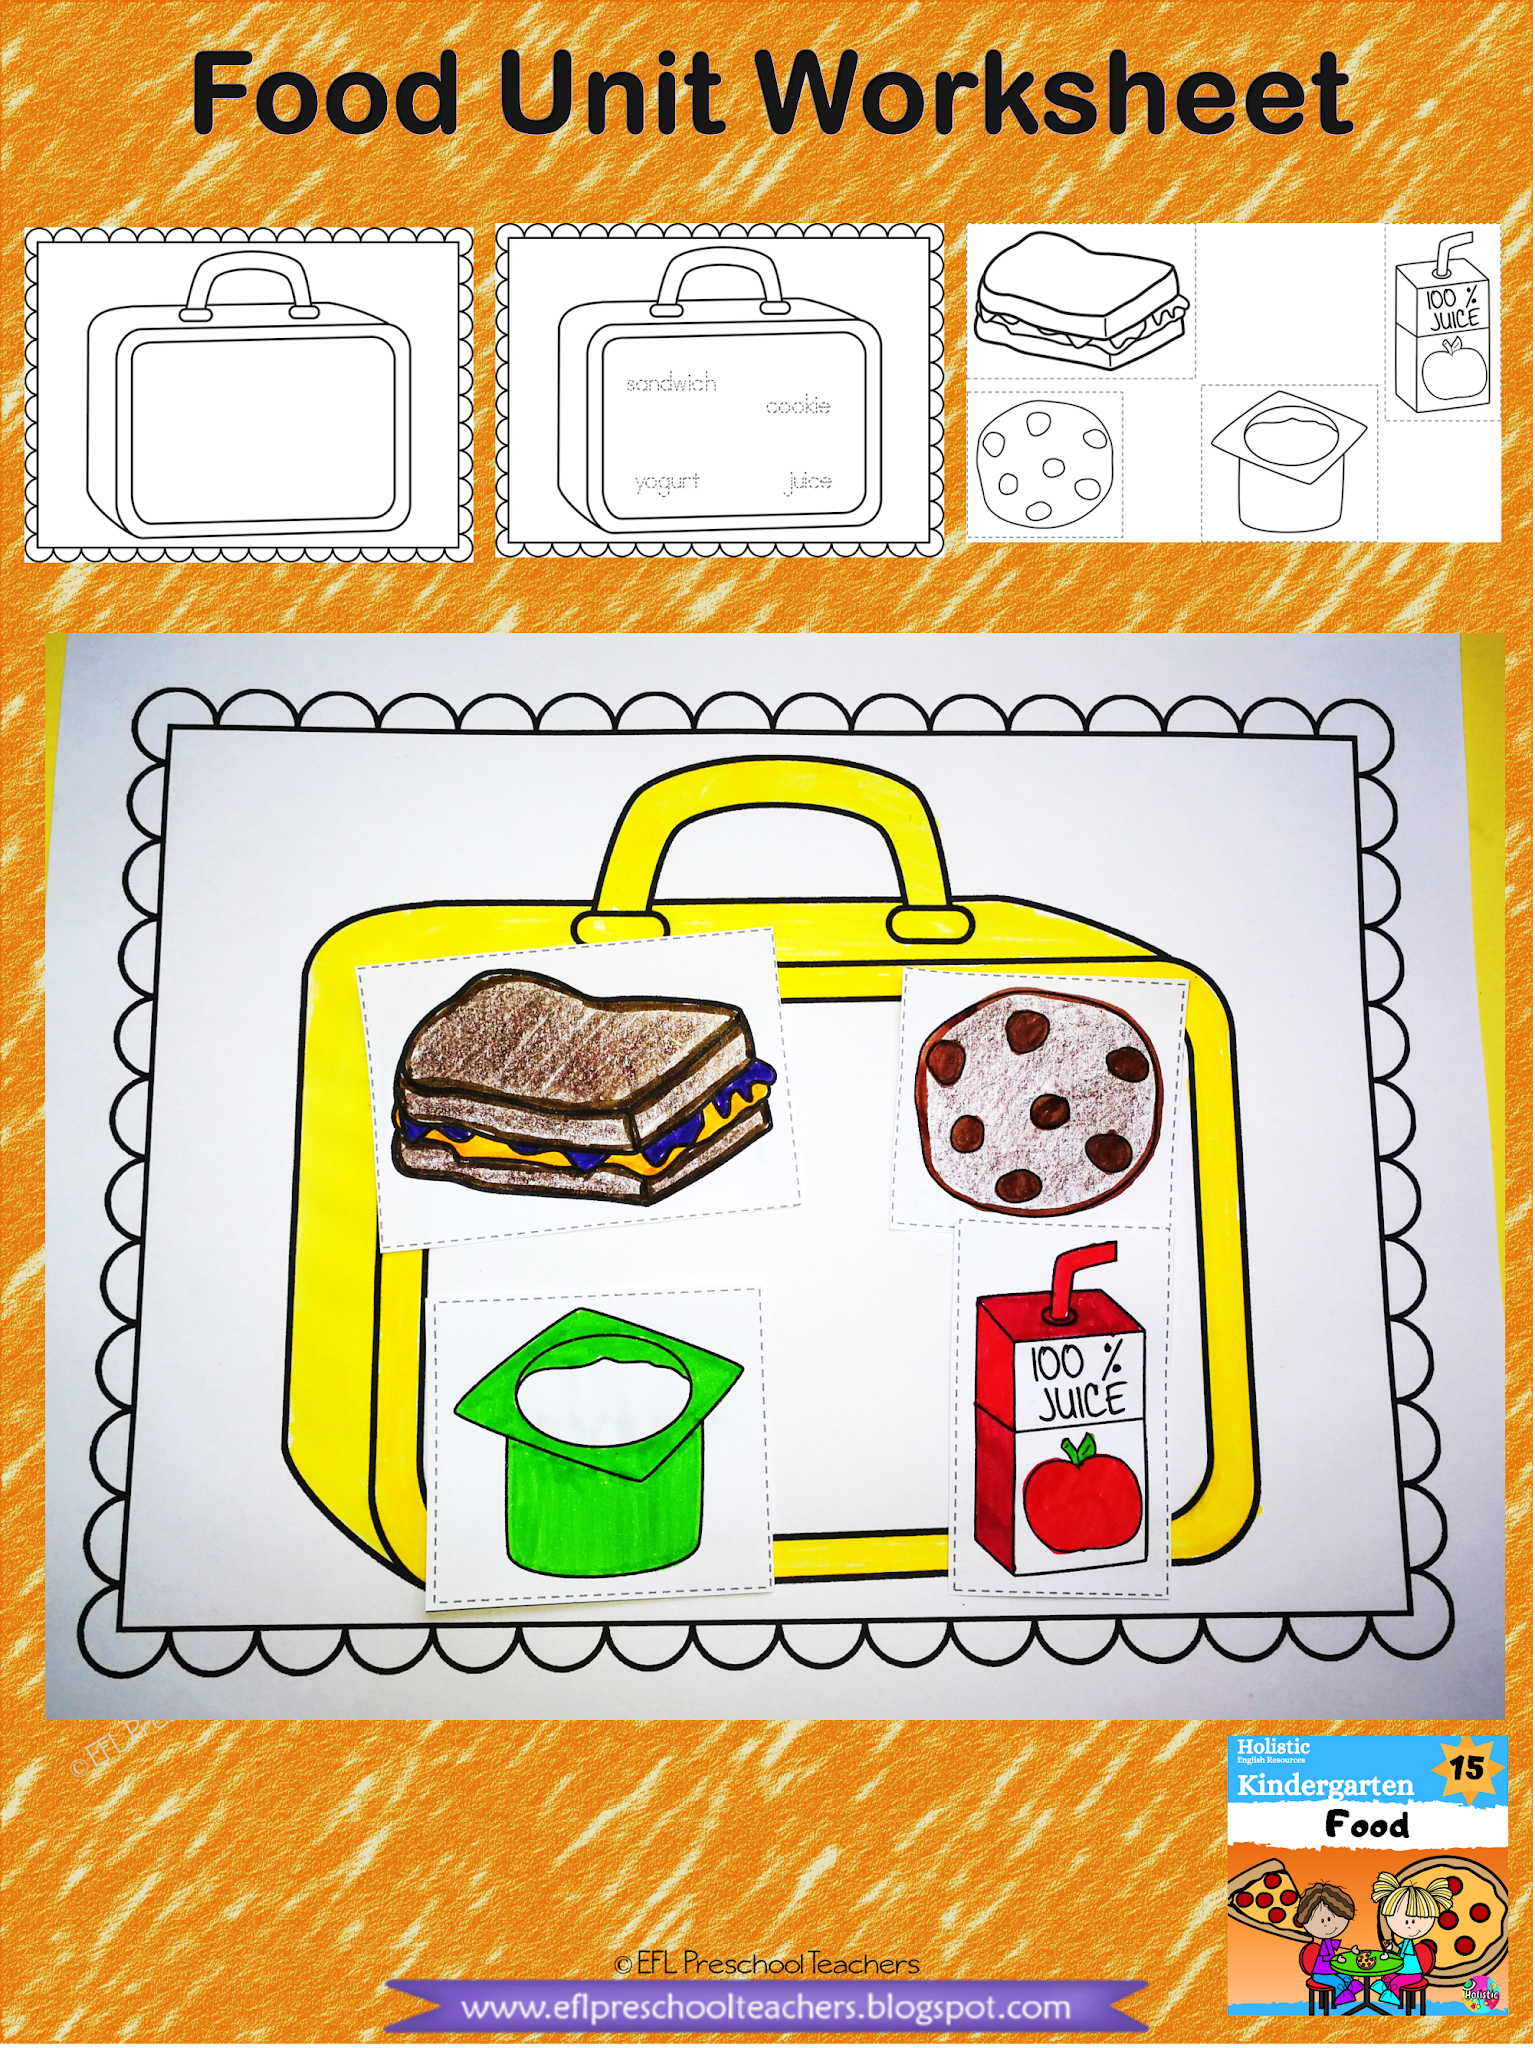 esl efl preschool teachers food unit worksheets